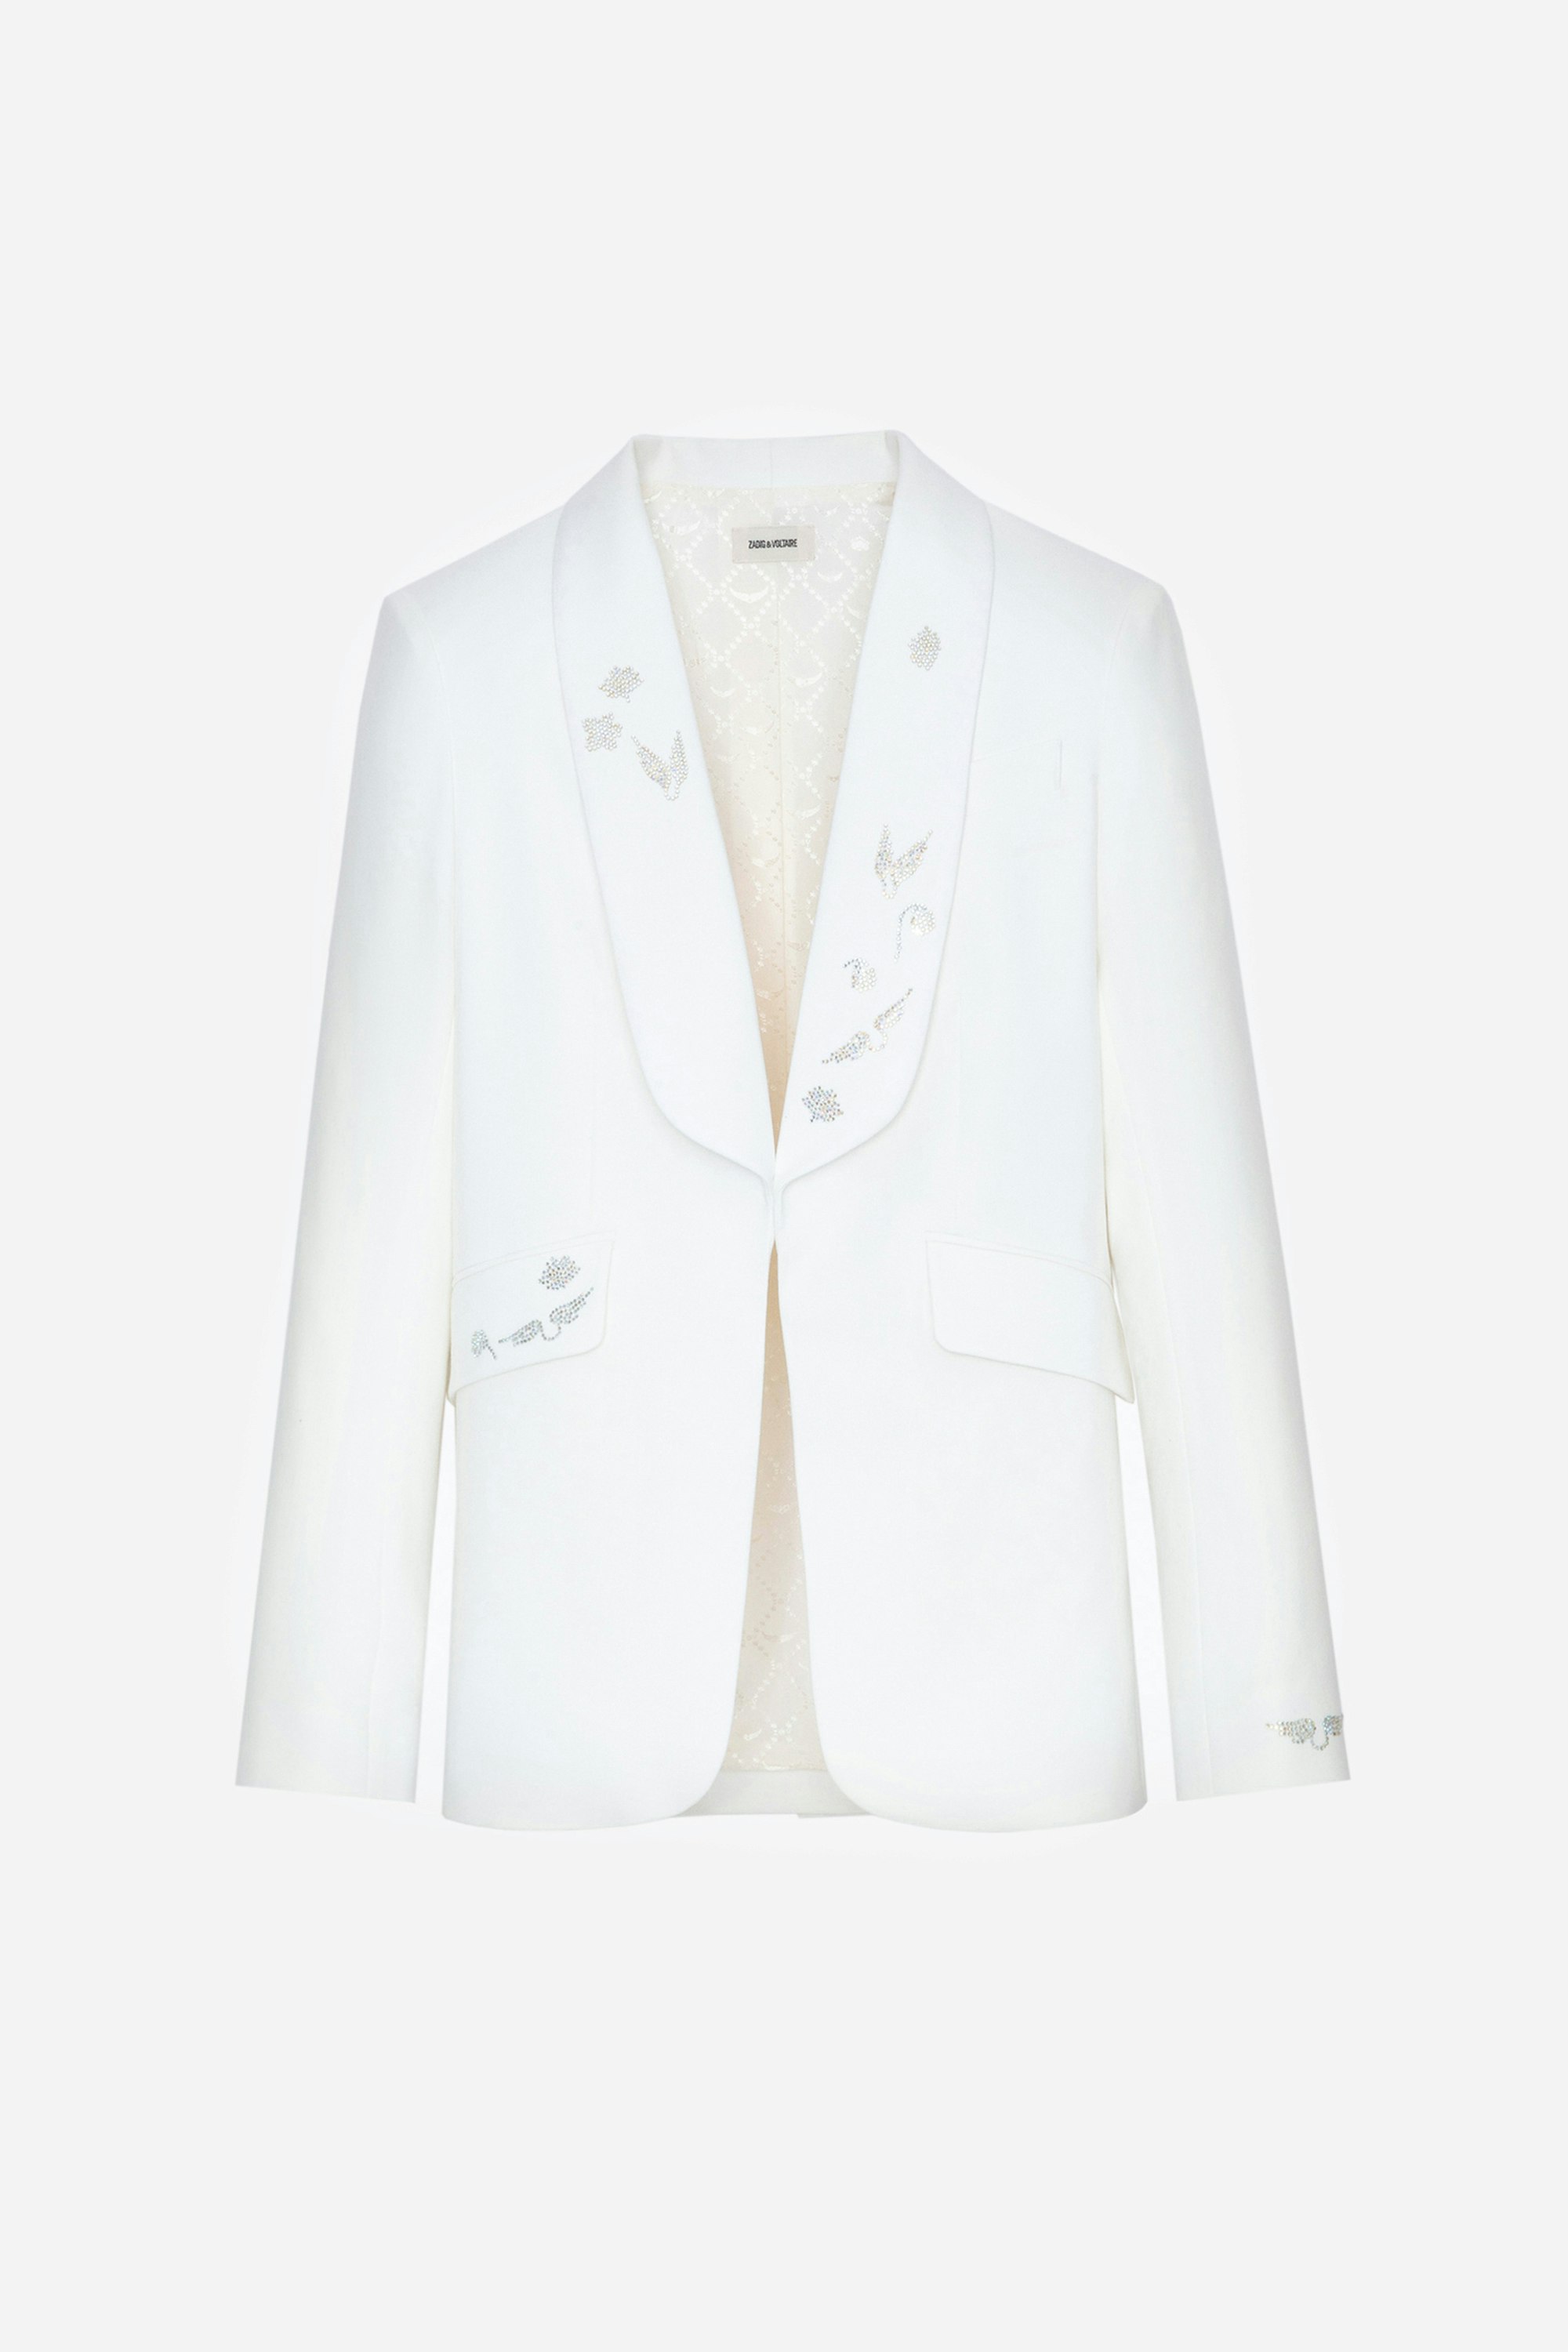 Blazer Date Strass - Veste blazer blanc à col rond et orné d'ailes en strass.